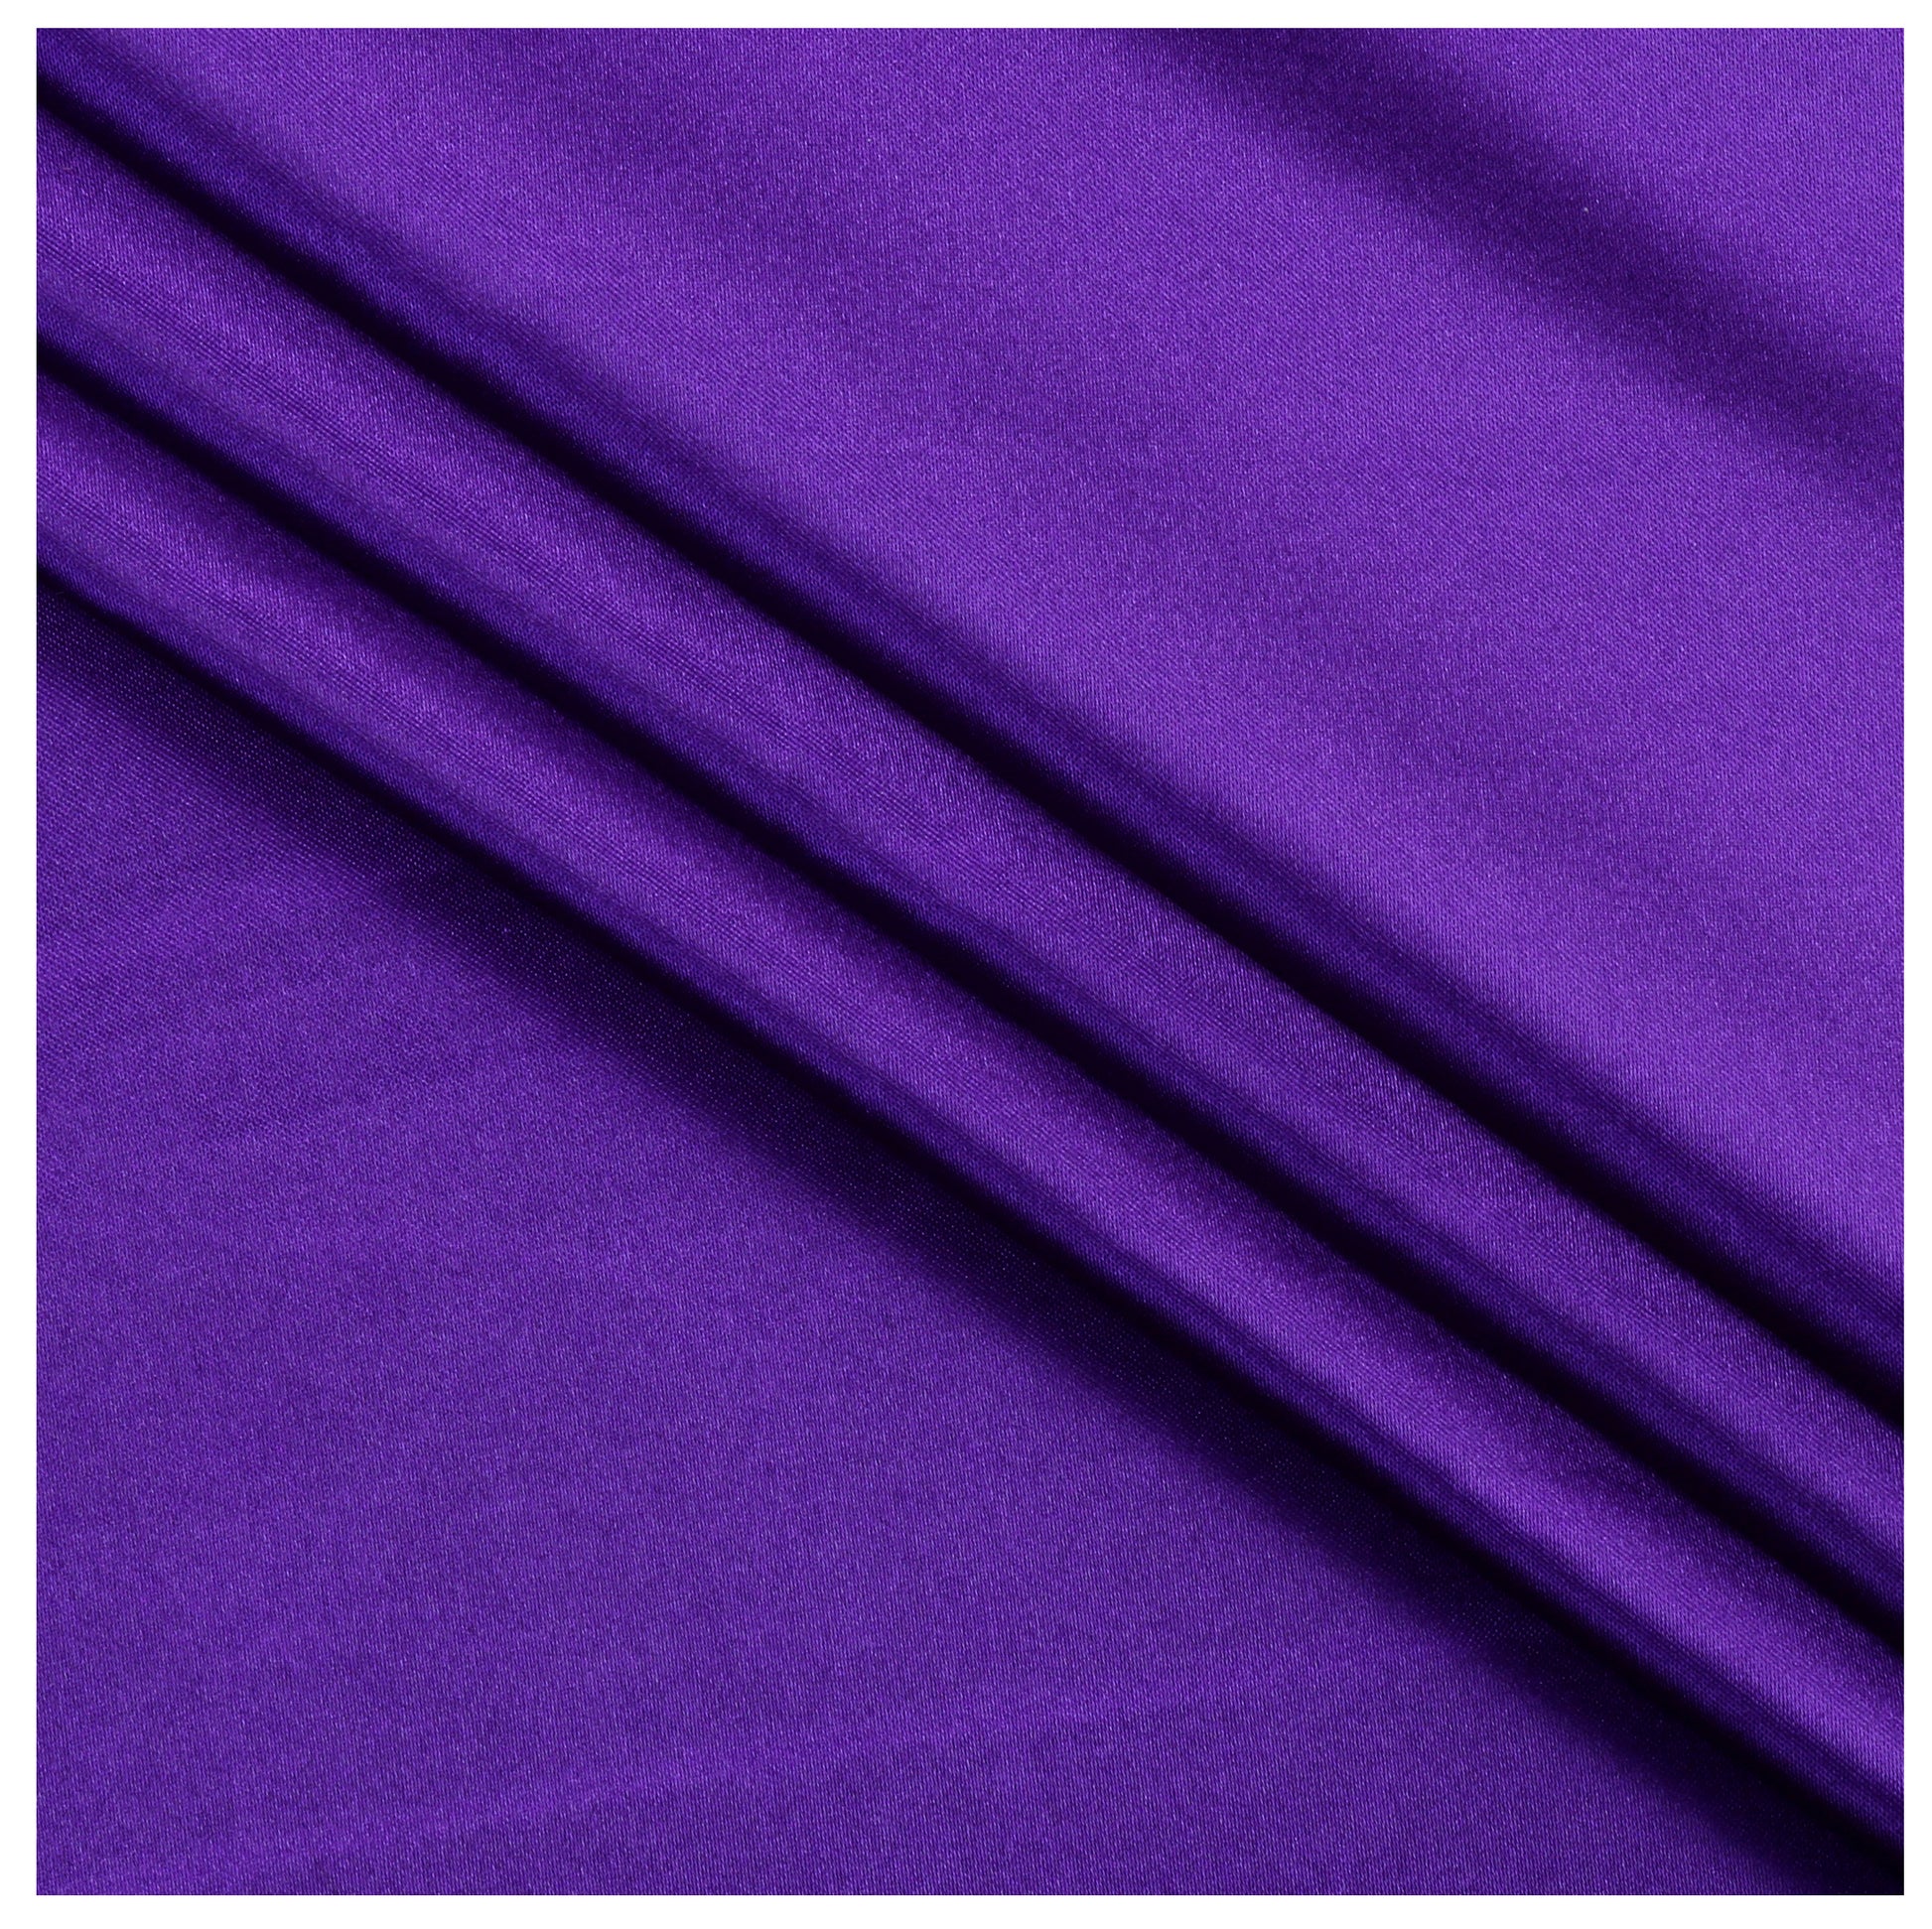 Cadbury Purple,396d8874-522d-4345-90f7-54ebb6e9a41a